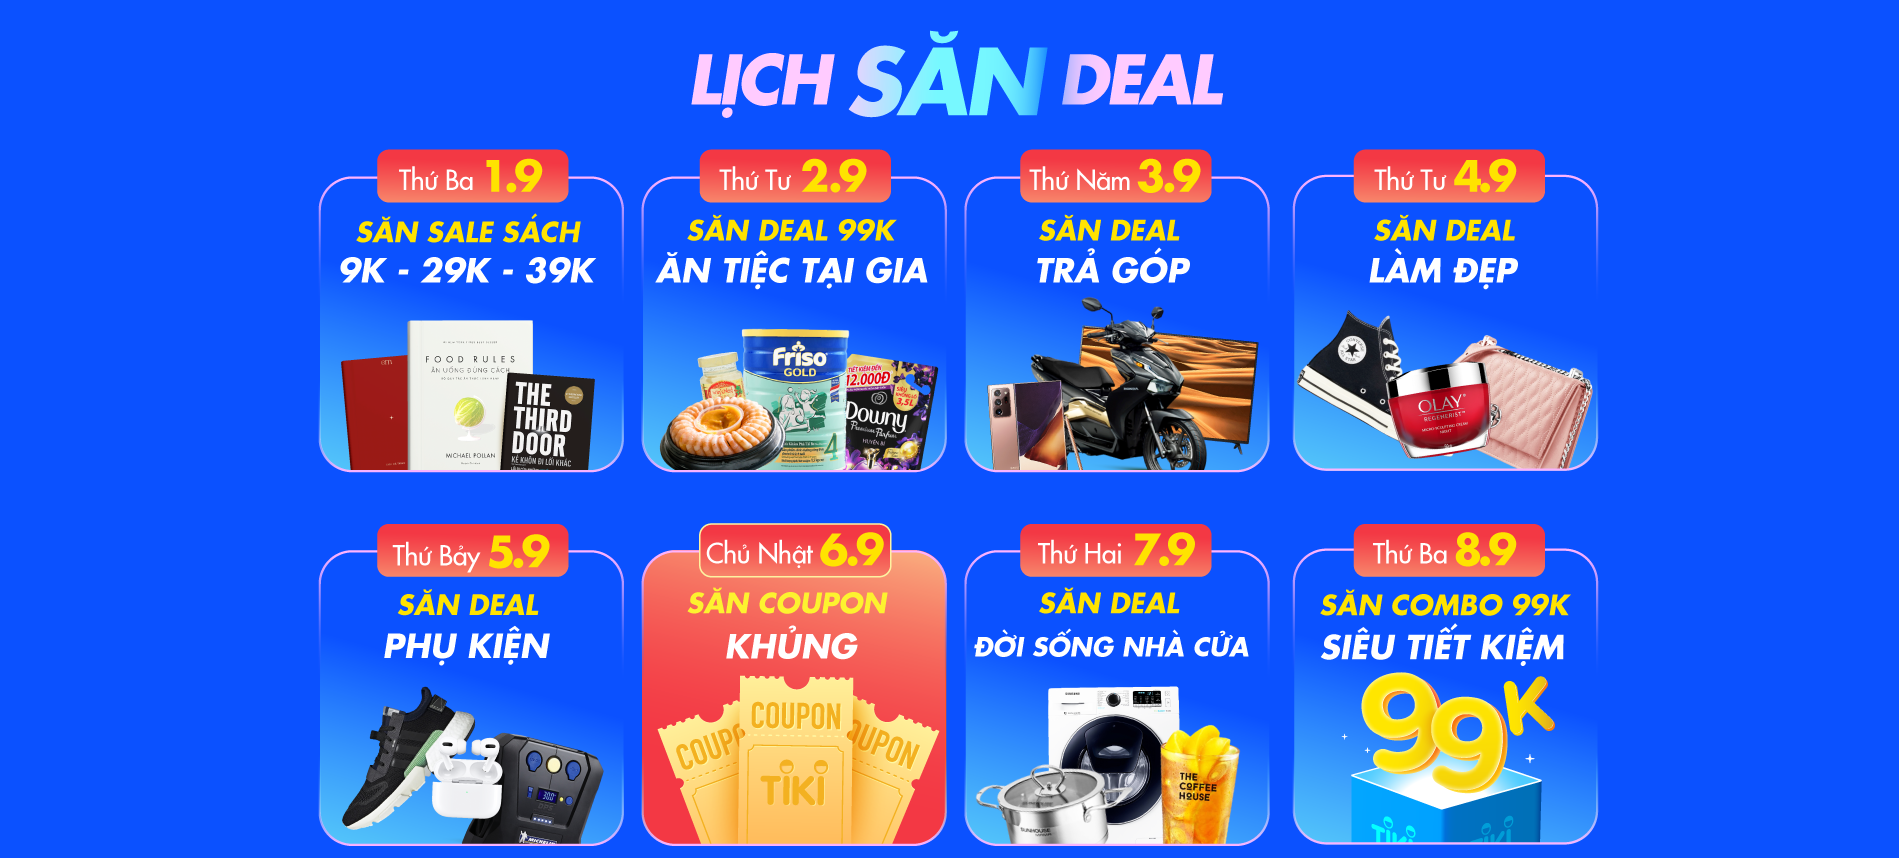 Lich san sale (2).png